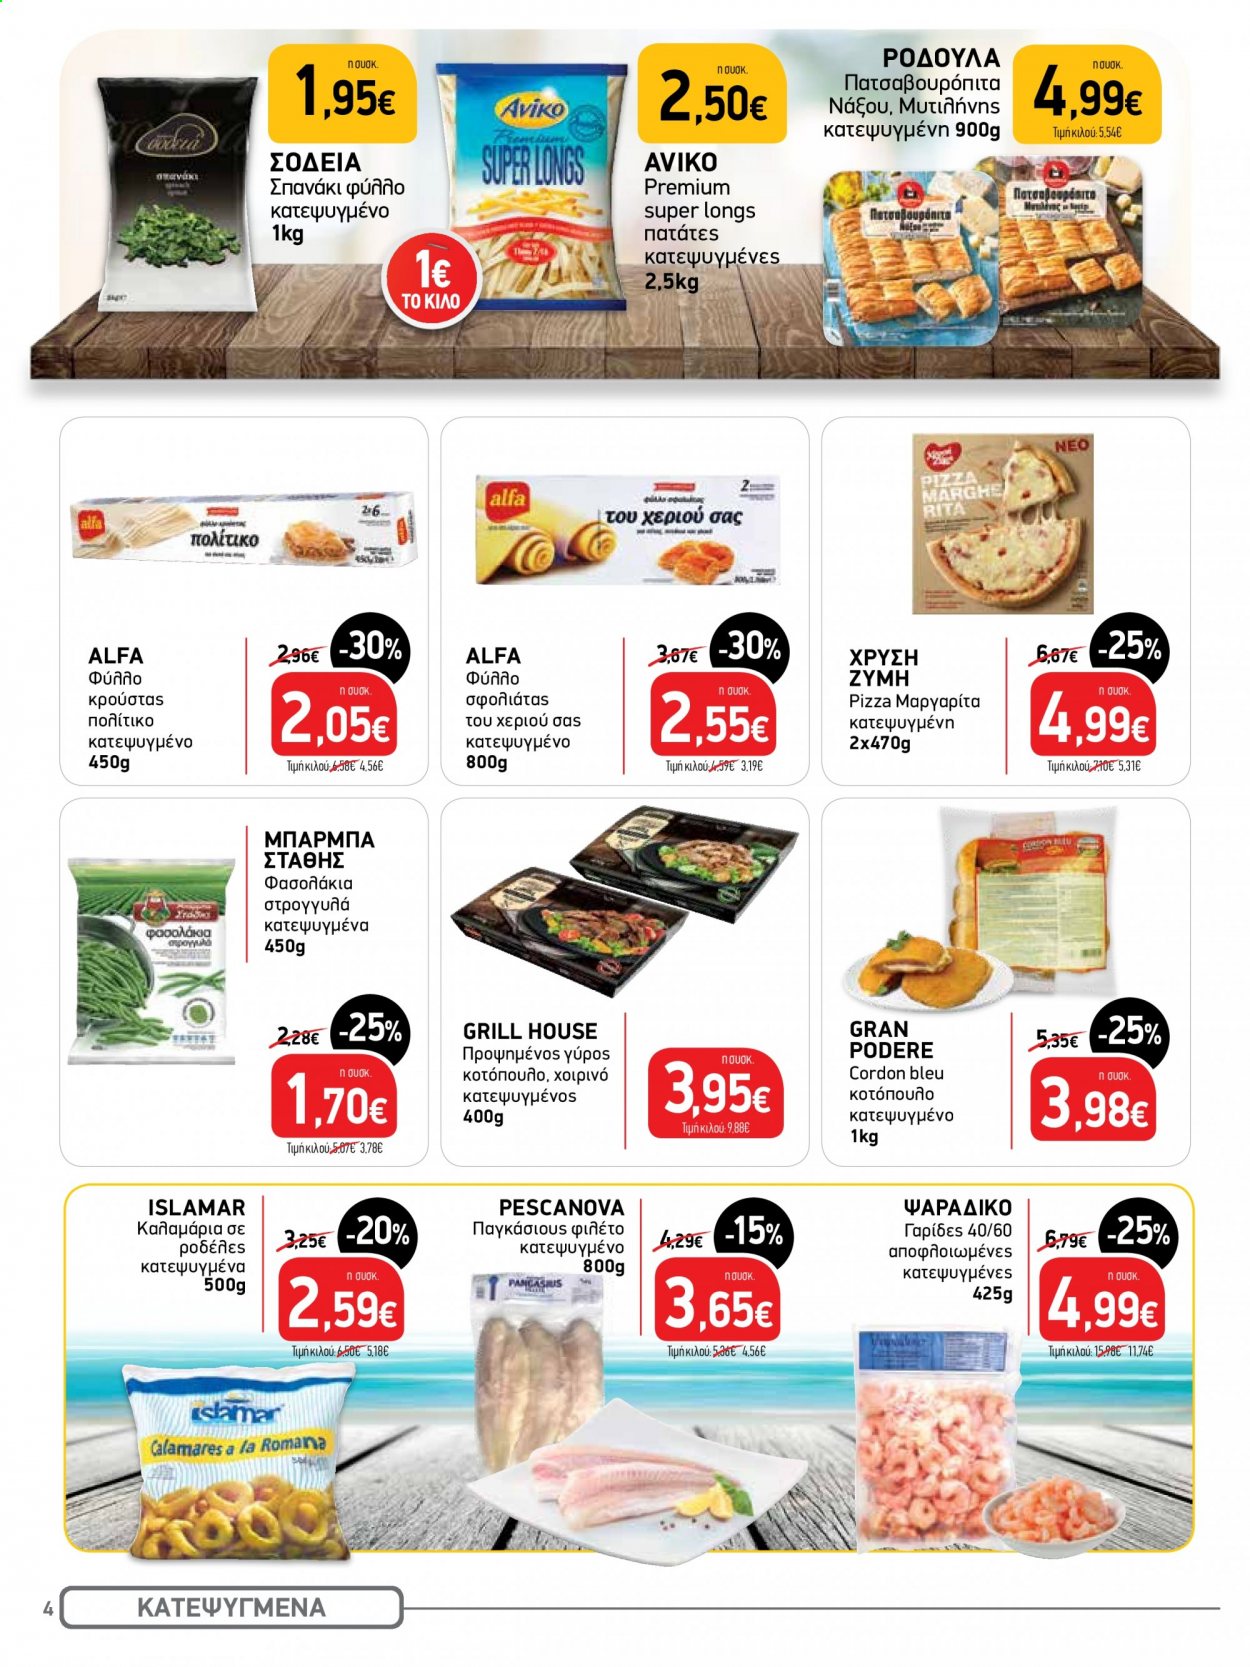 thumbnail - Φυλλάδια Bazaar - 19.02.2021 - 04.03.2021 - Εκπτωτικά προϊόντα - ζύμη, πατάτες, σπανάκι, φασολάκια, κοτόπουλο, γαρίδες, καλαμάρι. Σελίδα 4.